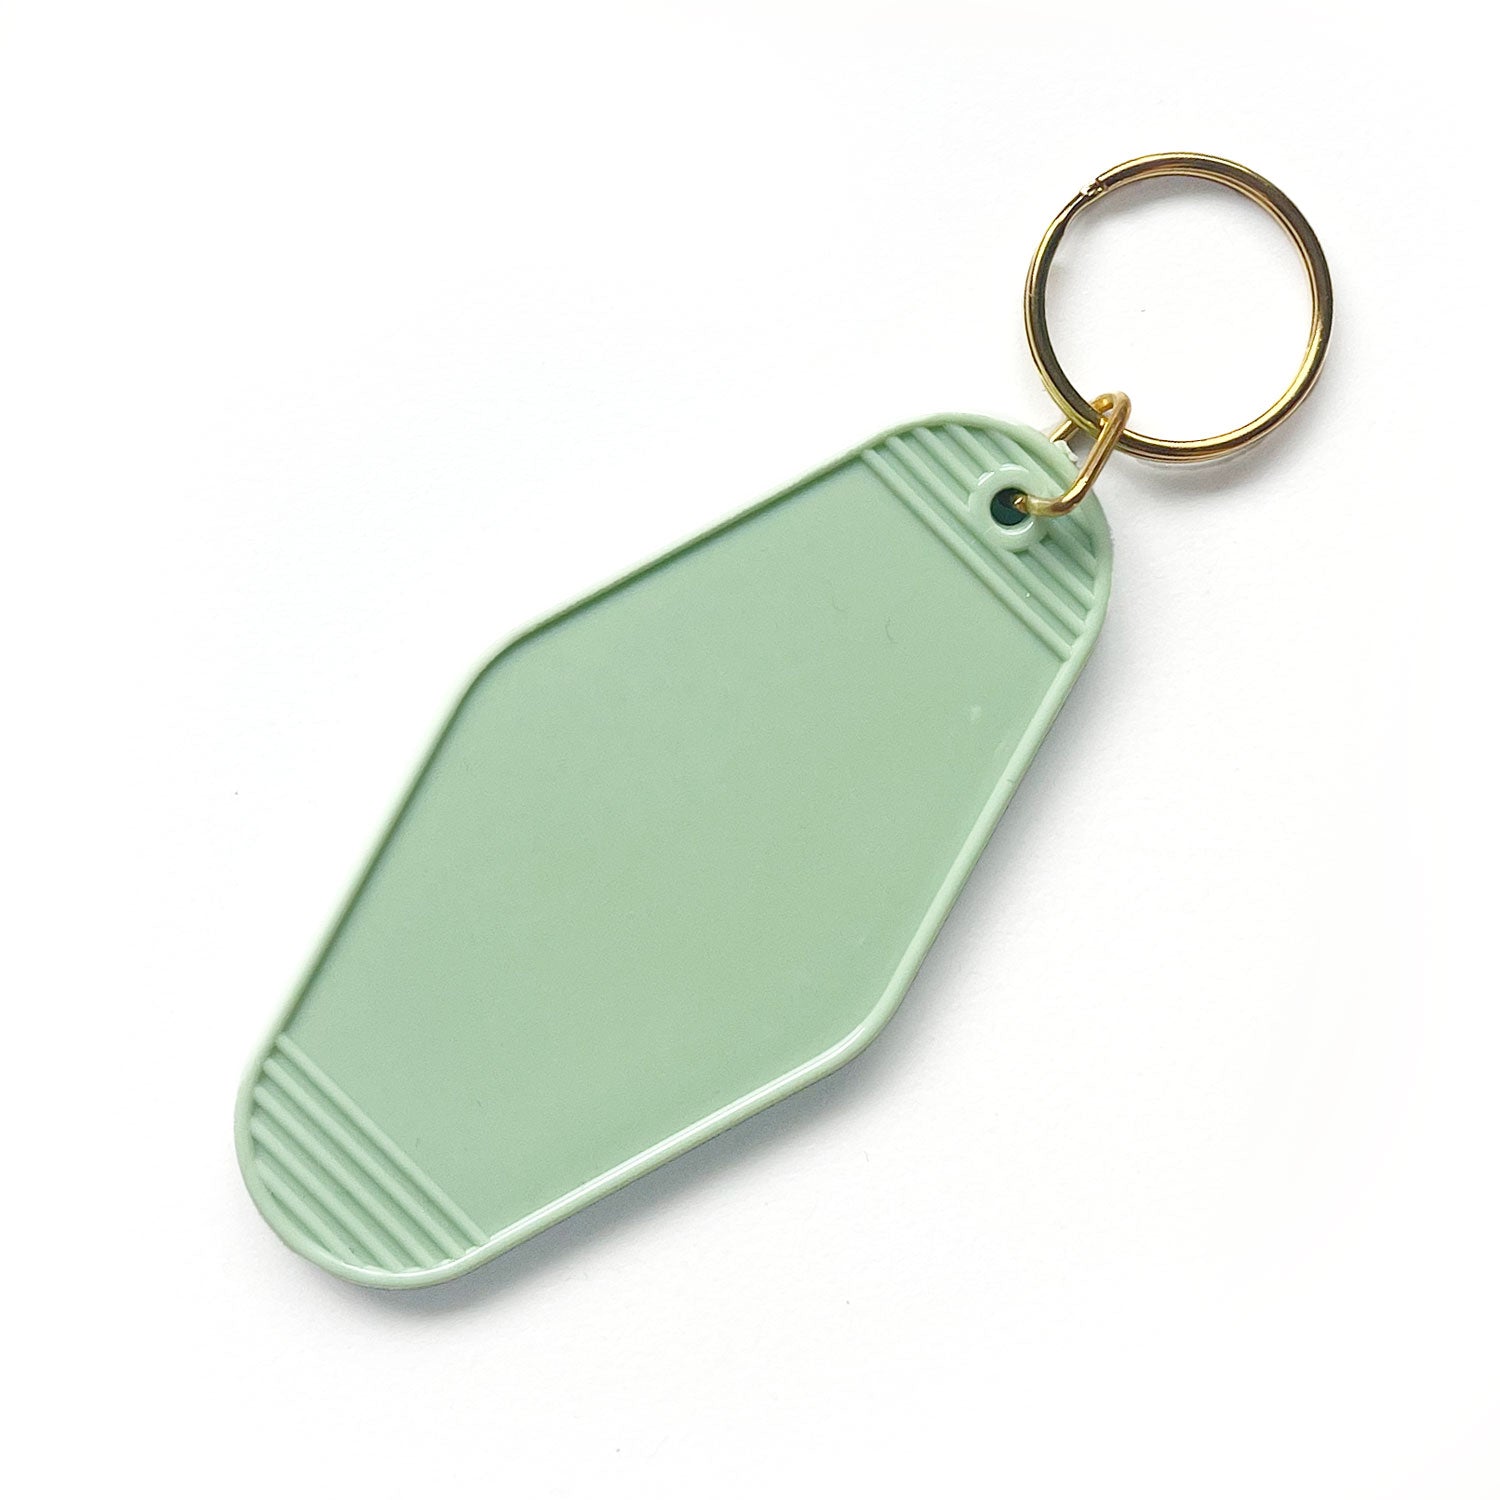 Purchase Wholesale motel keychain blank. Free Returns & Net 60